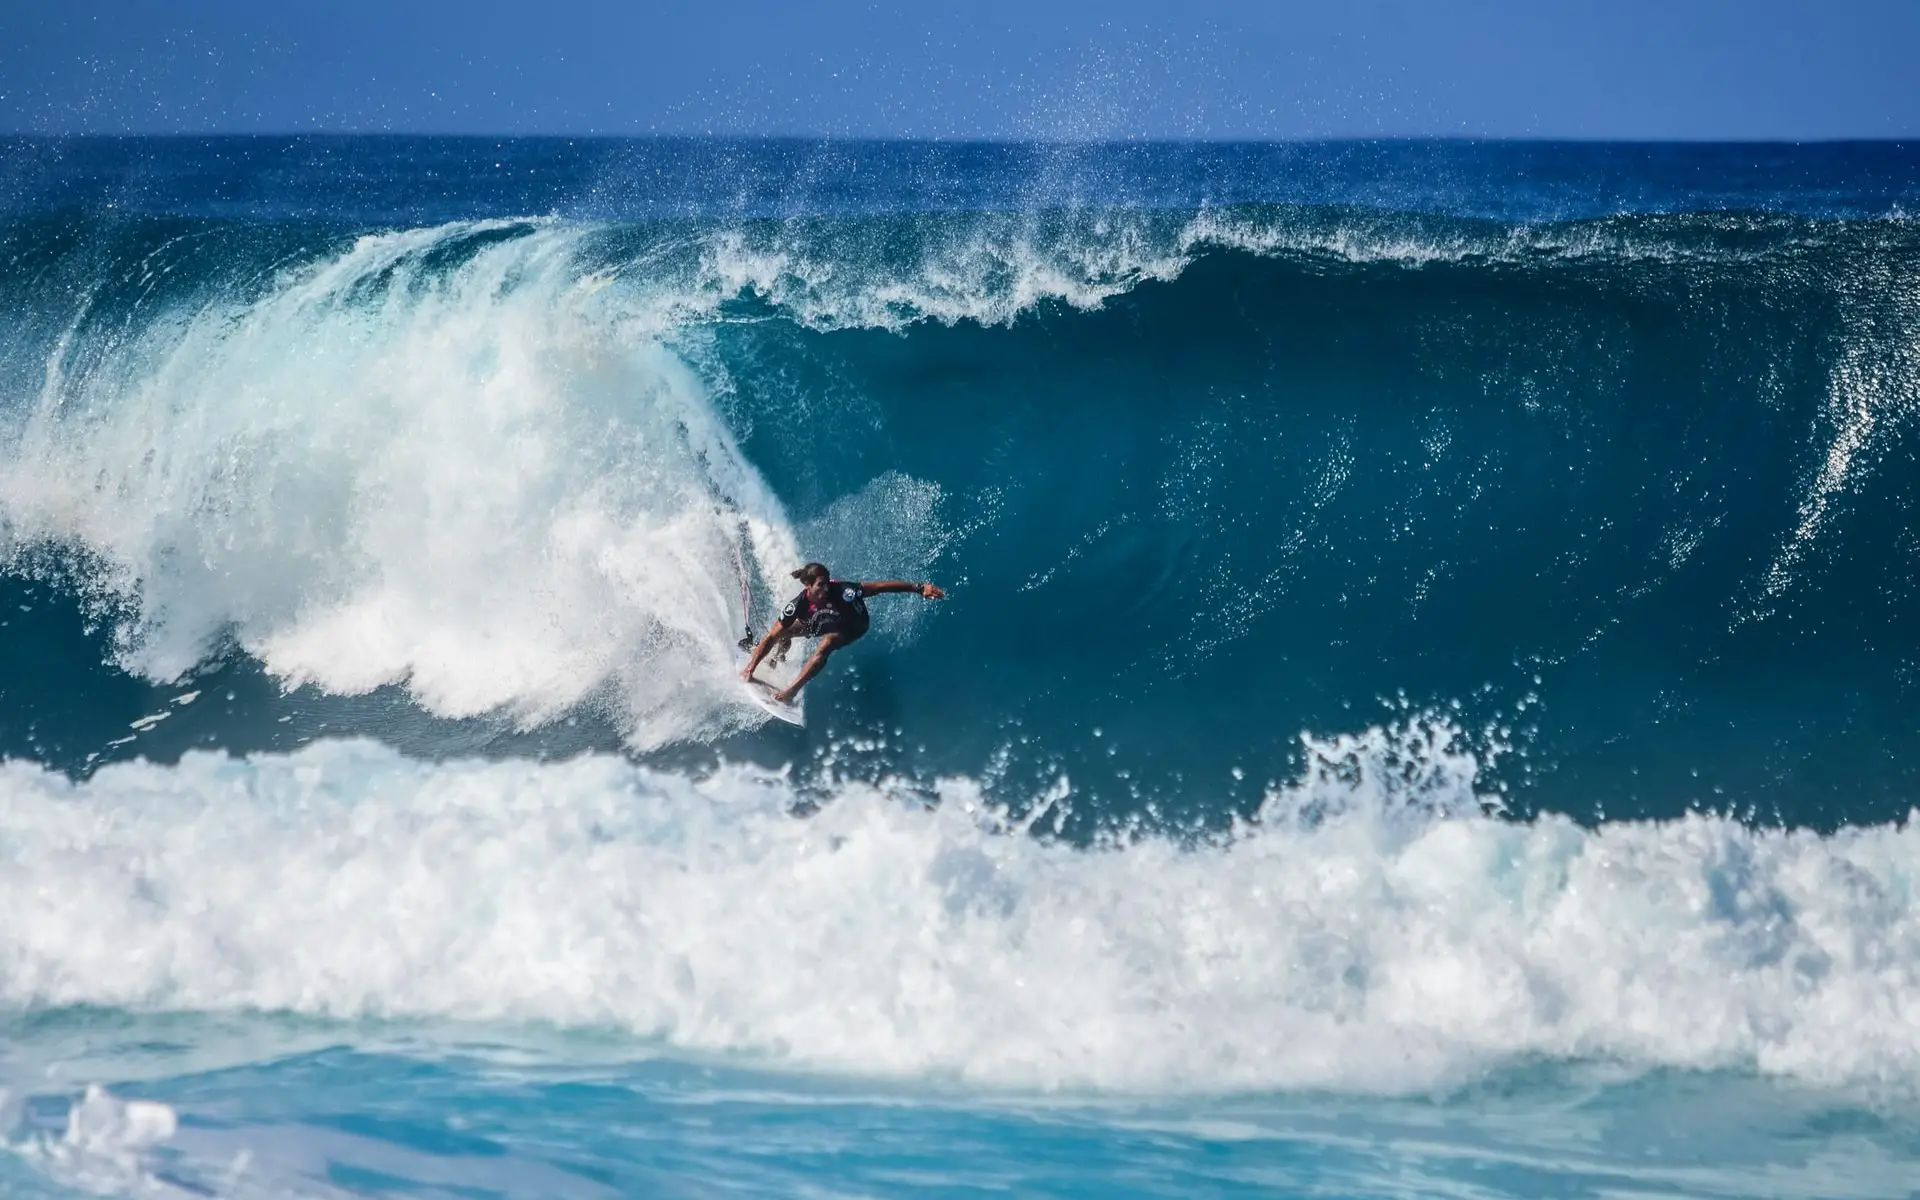 Do Surfers Like Constructive or Destructive Waves